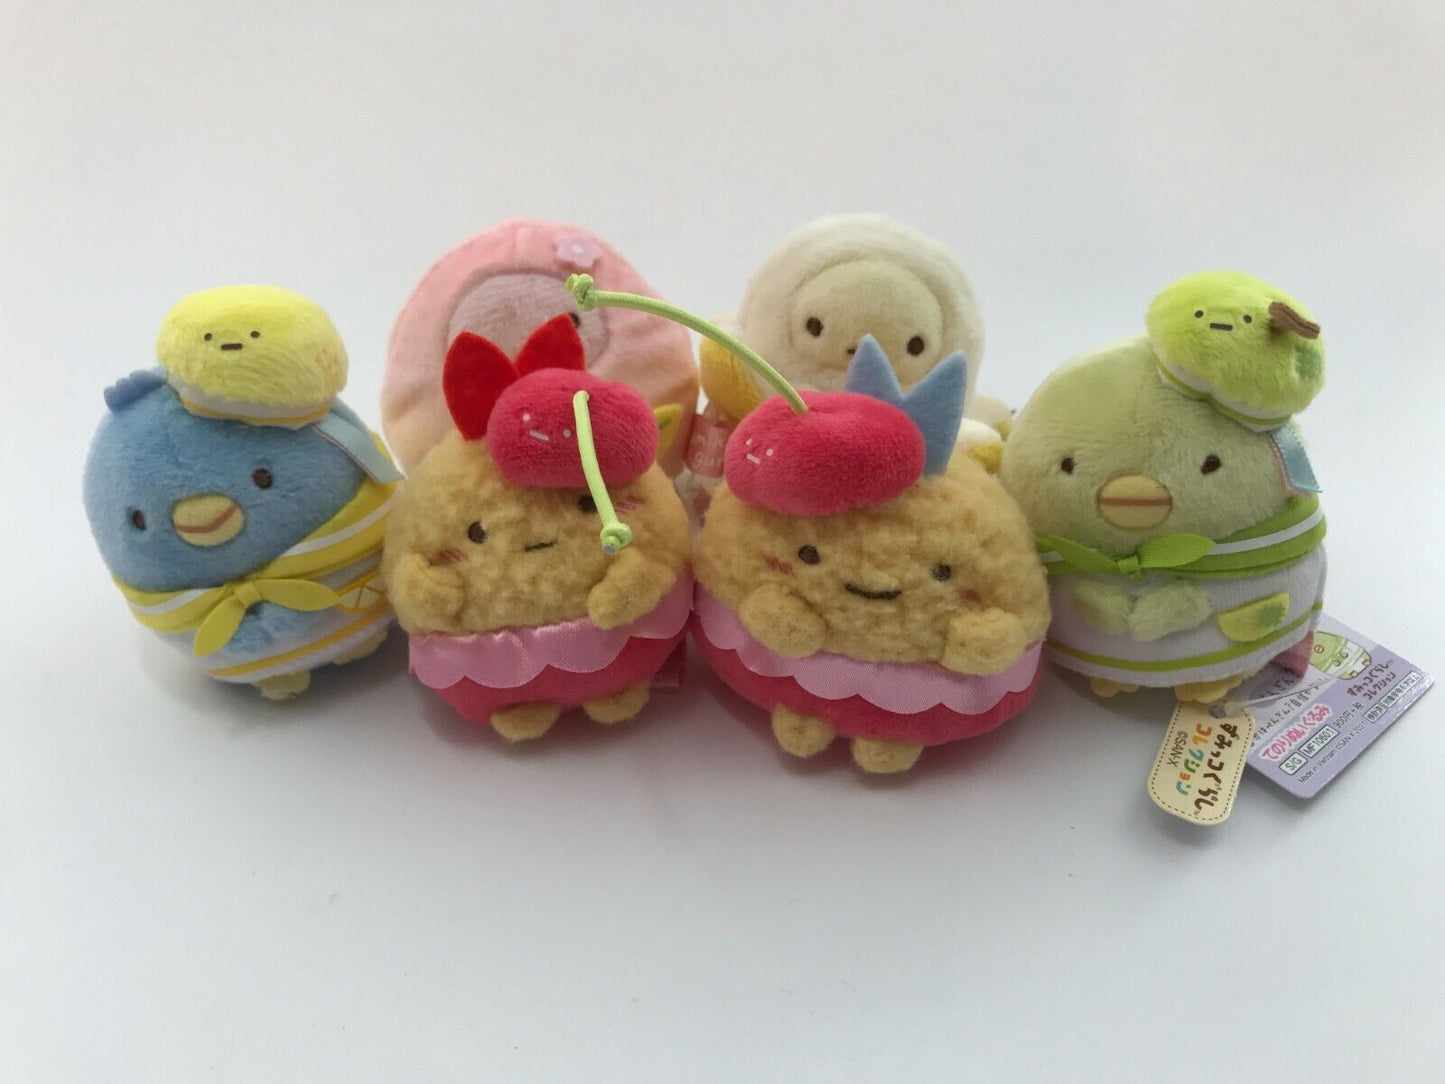 San-X Sumikko Gurashi  Tenori Plush Toy Set of 6 PenPen Fruits Vacation MF10601